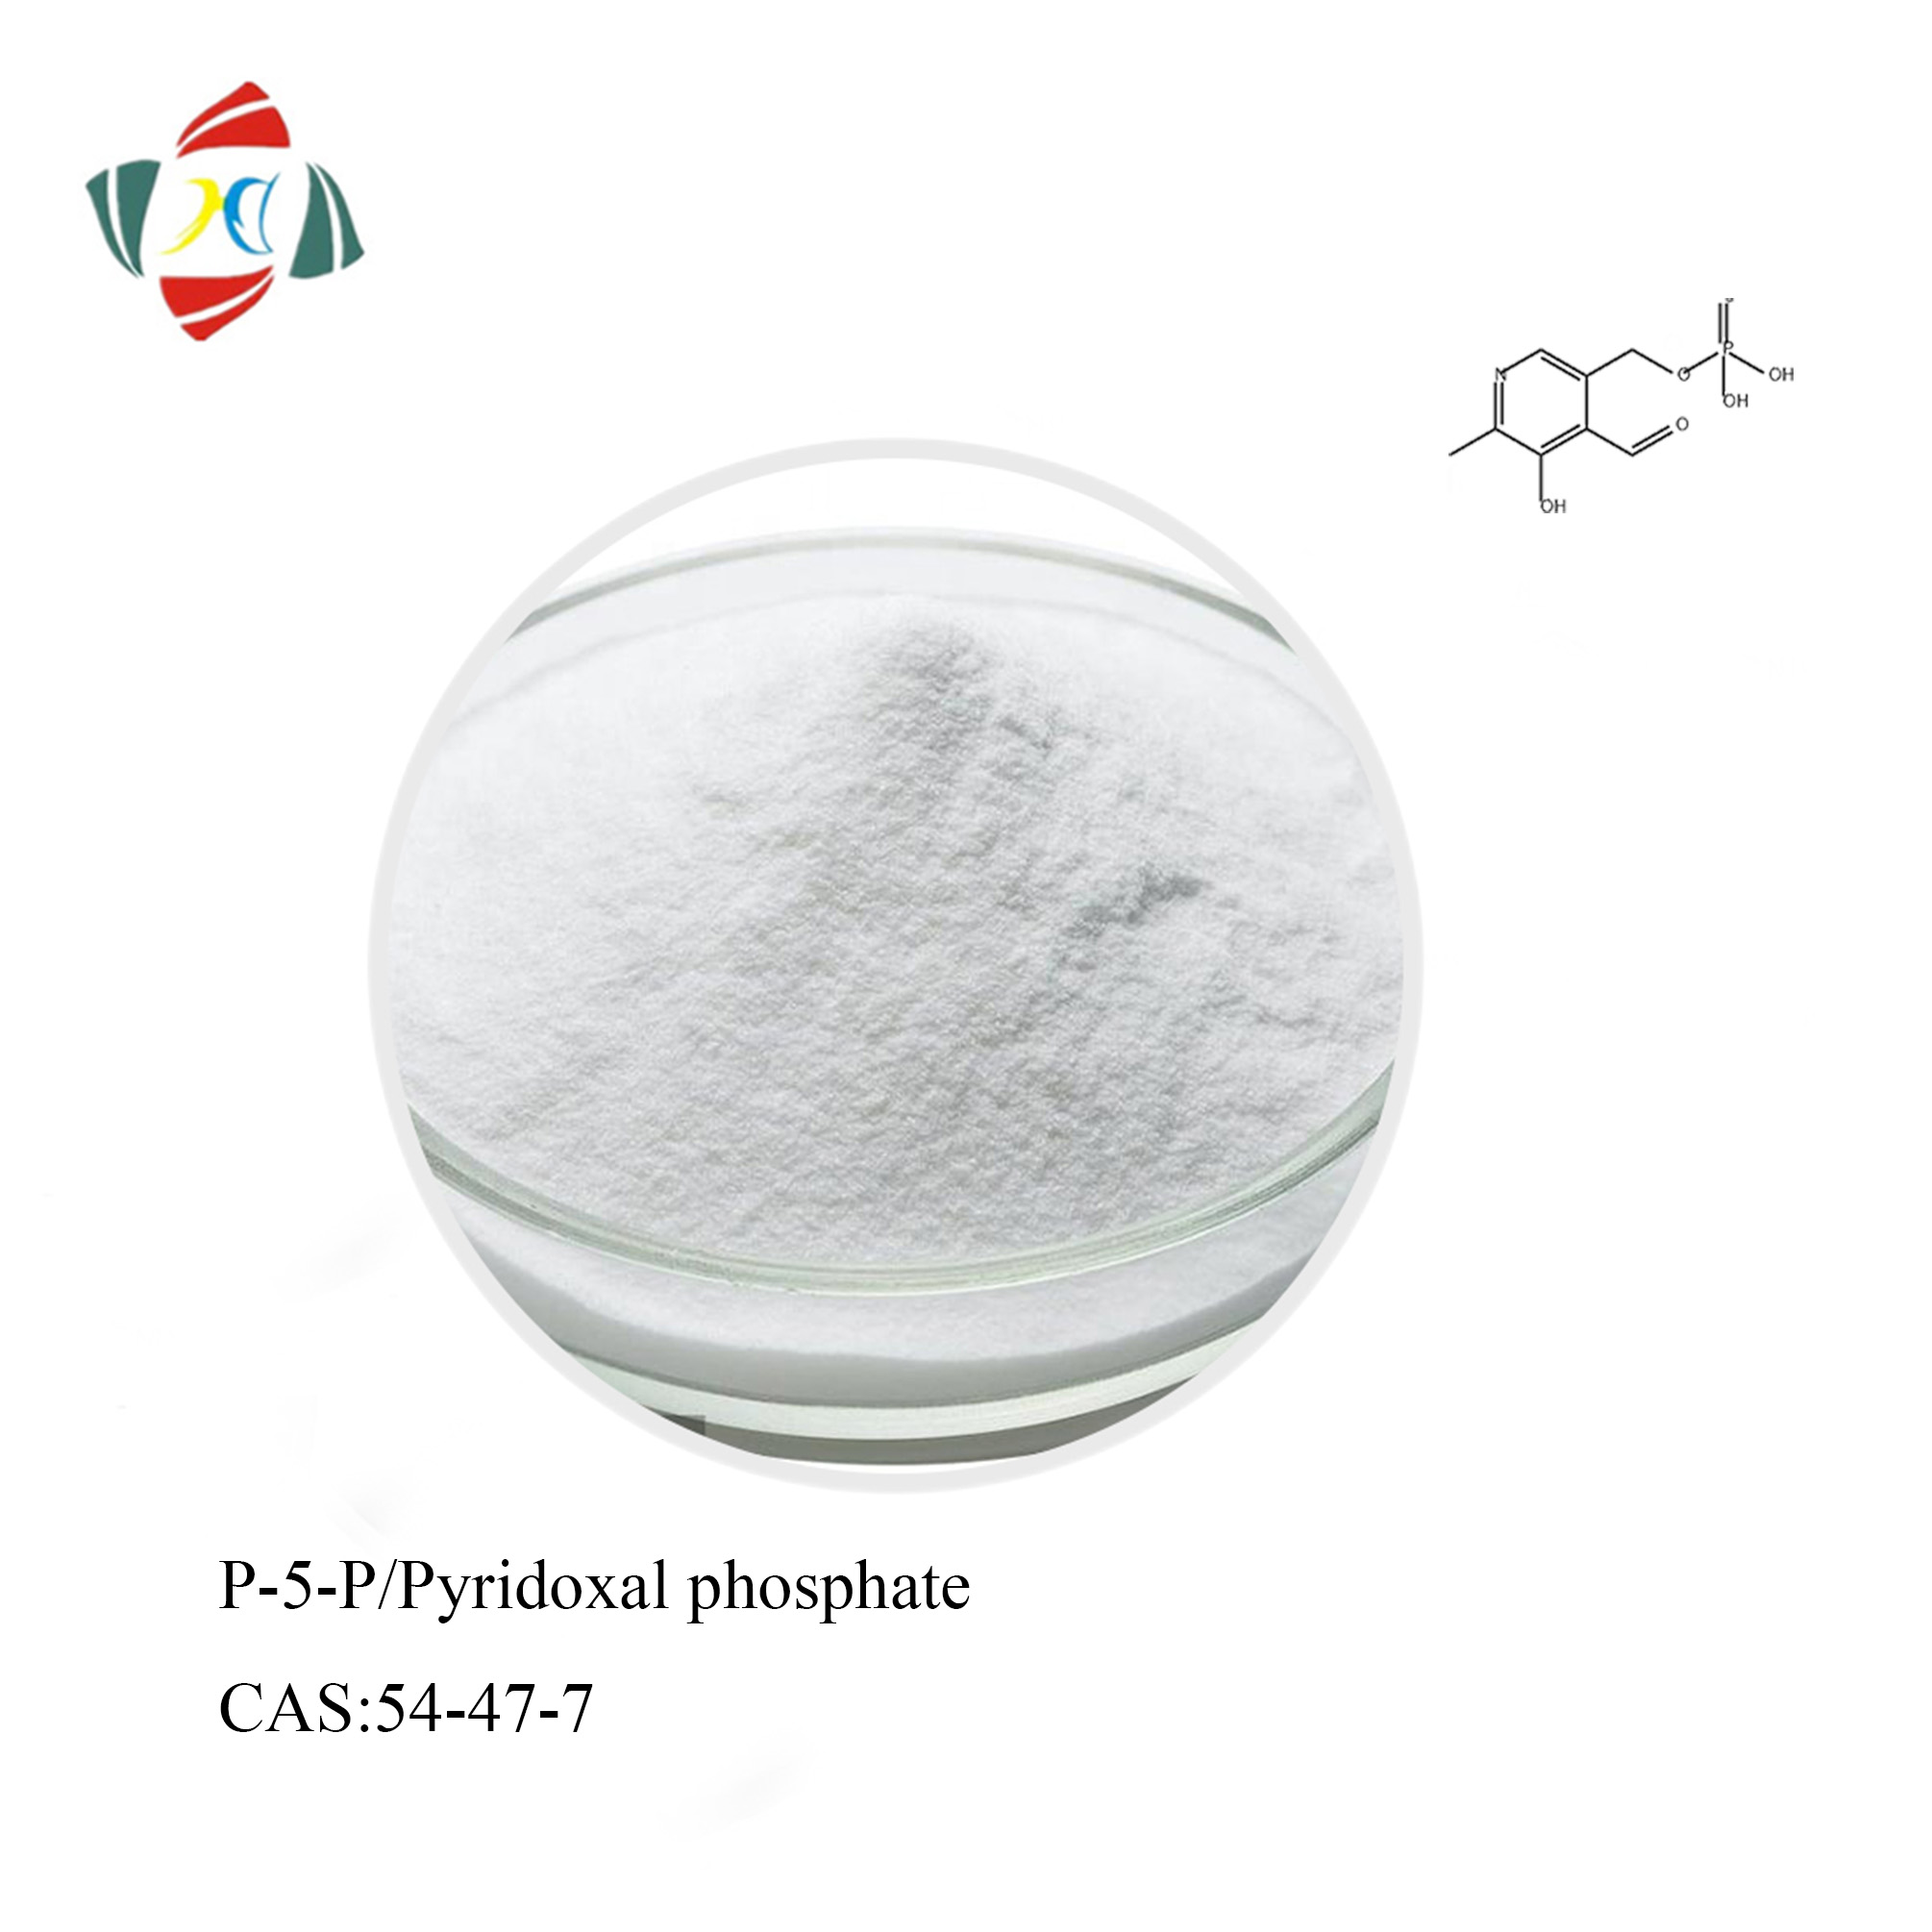 Kup Pirydoksal 5 fosforan/witamina B6 CAS 54-47-7,Pirydoksal 5 fosforan/witamina B6 CAS 54-47-7 Cena,Pirydoksal 5 fosforan/witamina B6 CAS 54-47-7 marki,Pirydoksal 5 fosforan/witamina B6 CAS 54-47-7 Producent,Pirydoksal 5 fosforan/witamina B6 CAS 54-47-7 Cytaty,Pirydoksal 5 fosforan/witamina B6 CAS 54-47-7 spółka,